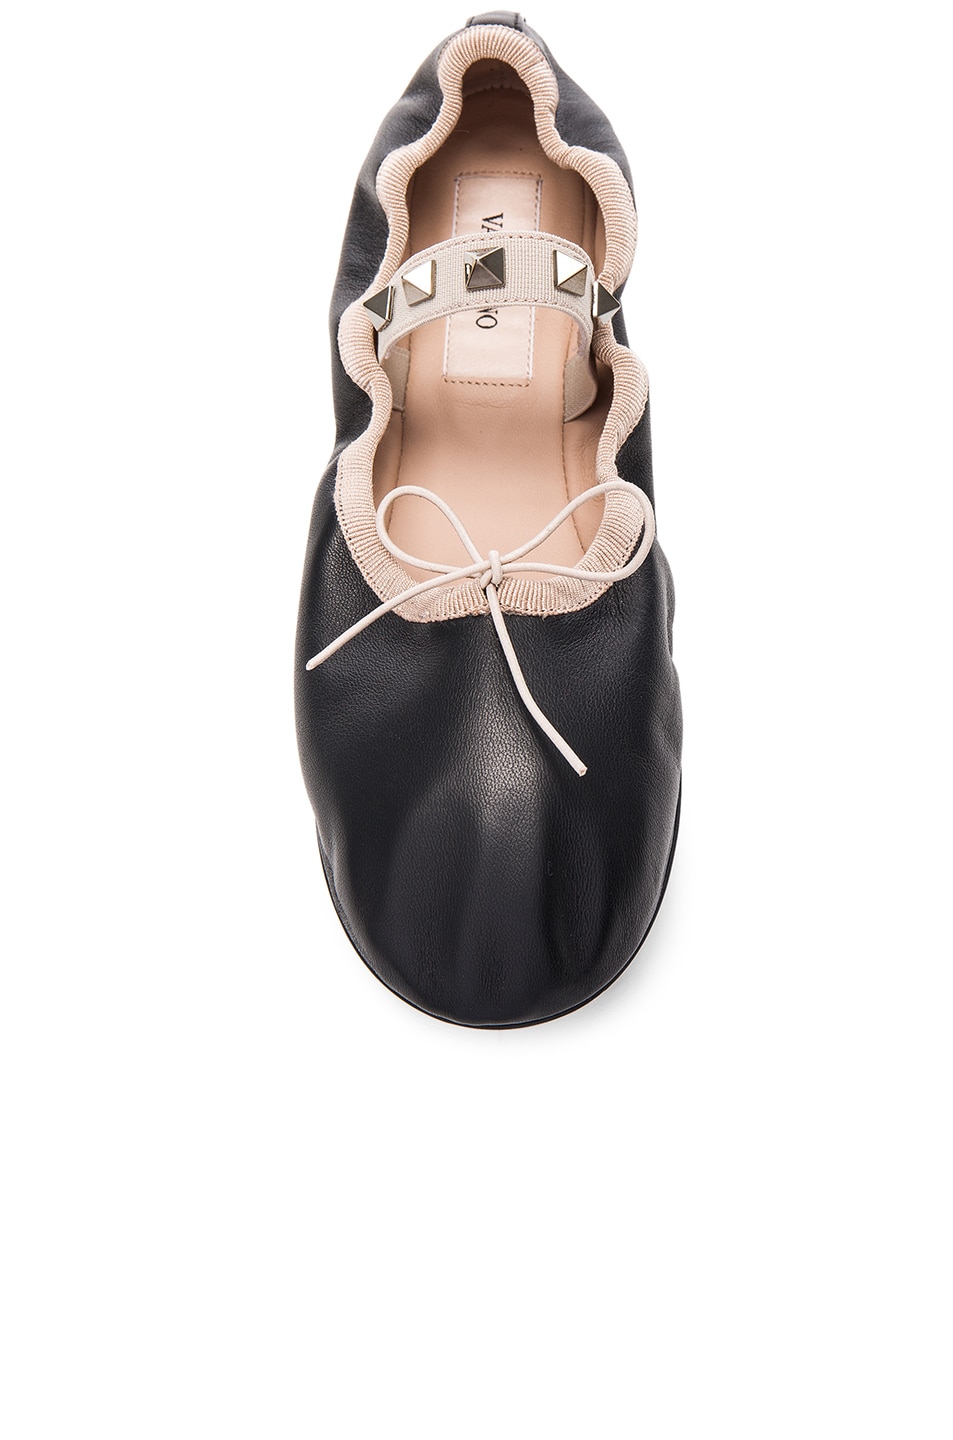 VALENTINO Rockstud Ballet Leather Ballerina Flat, Poudre | ModeSens